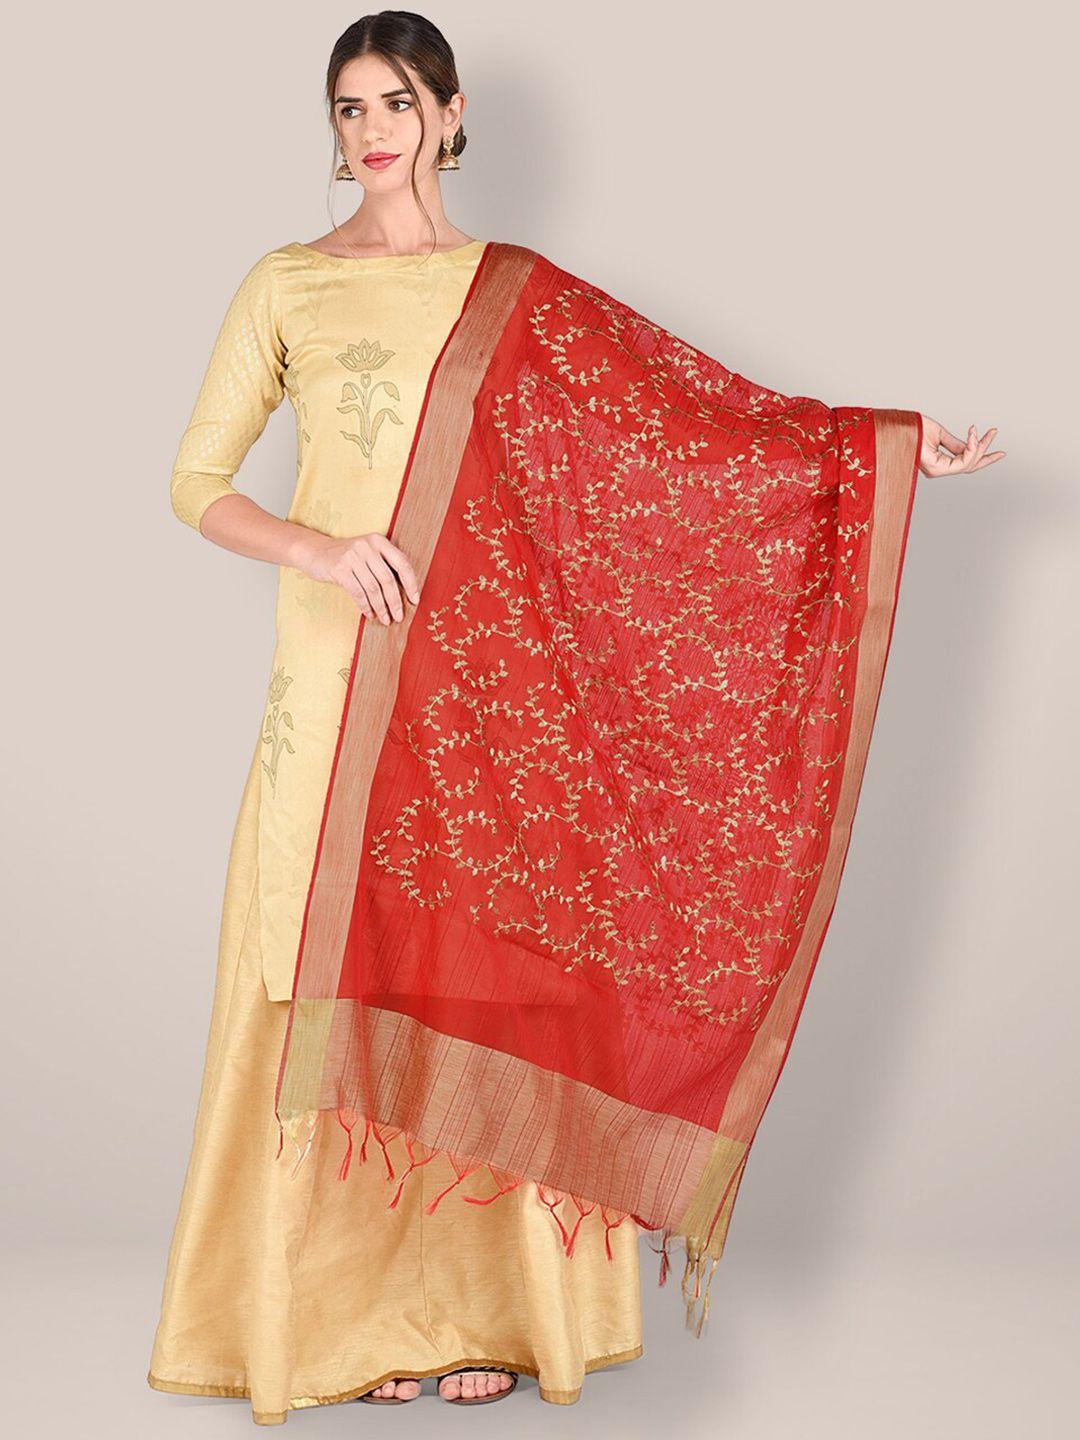 dupatta-bazaar-women-red-&-gold-toned-embroidered-dupatta